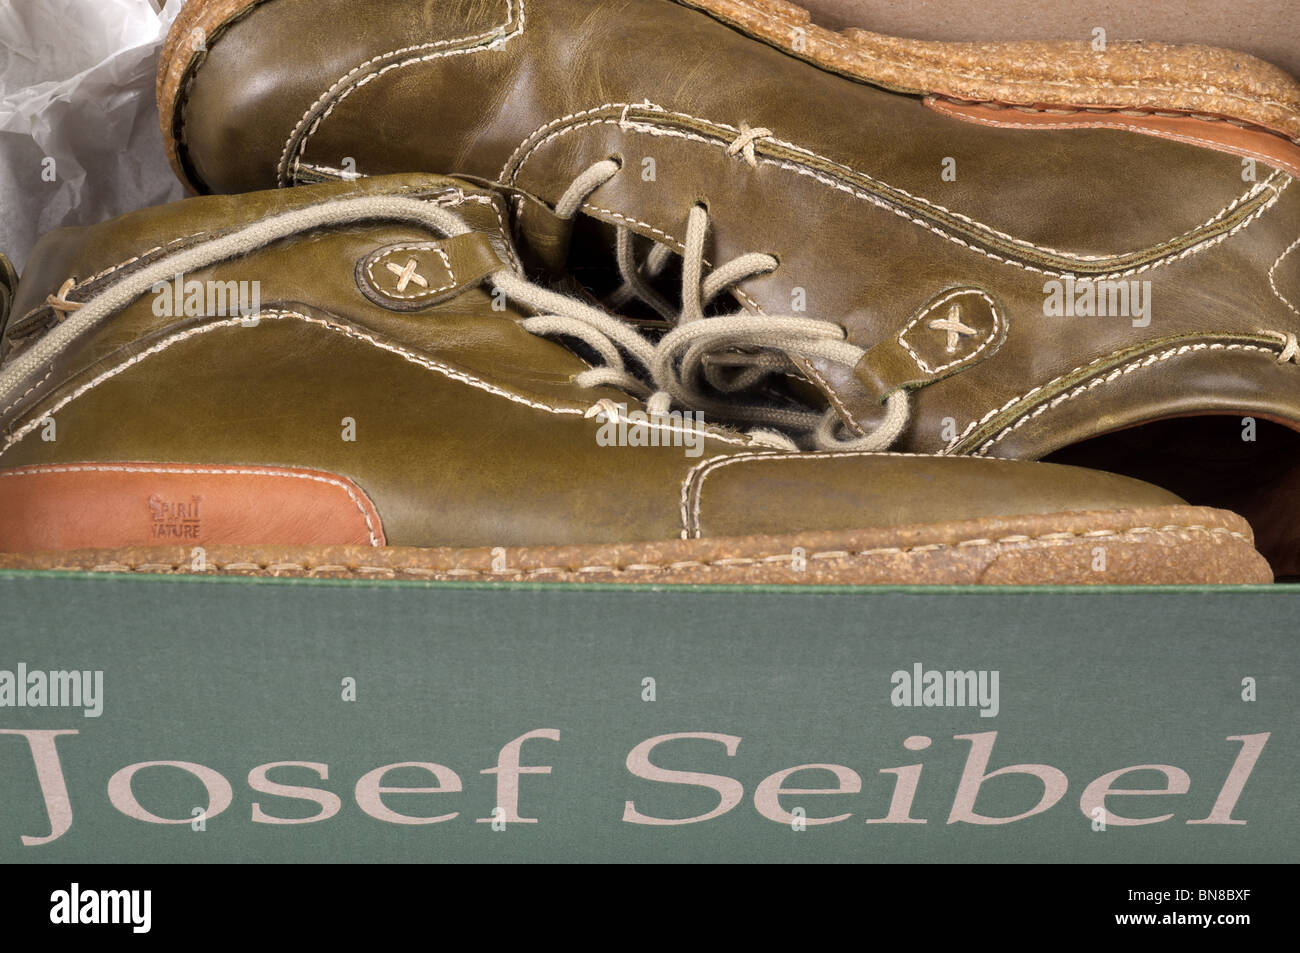 Josef Seibel 'Spirit of Nature' shoes Stock Photo - Alamy